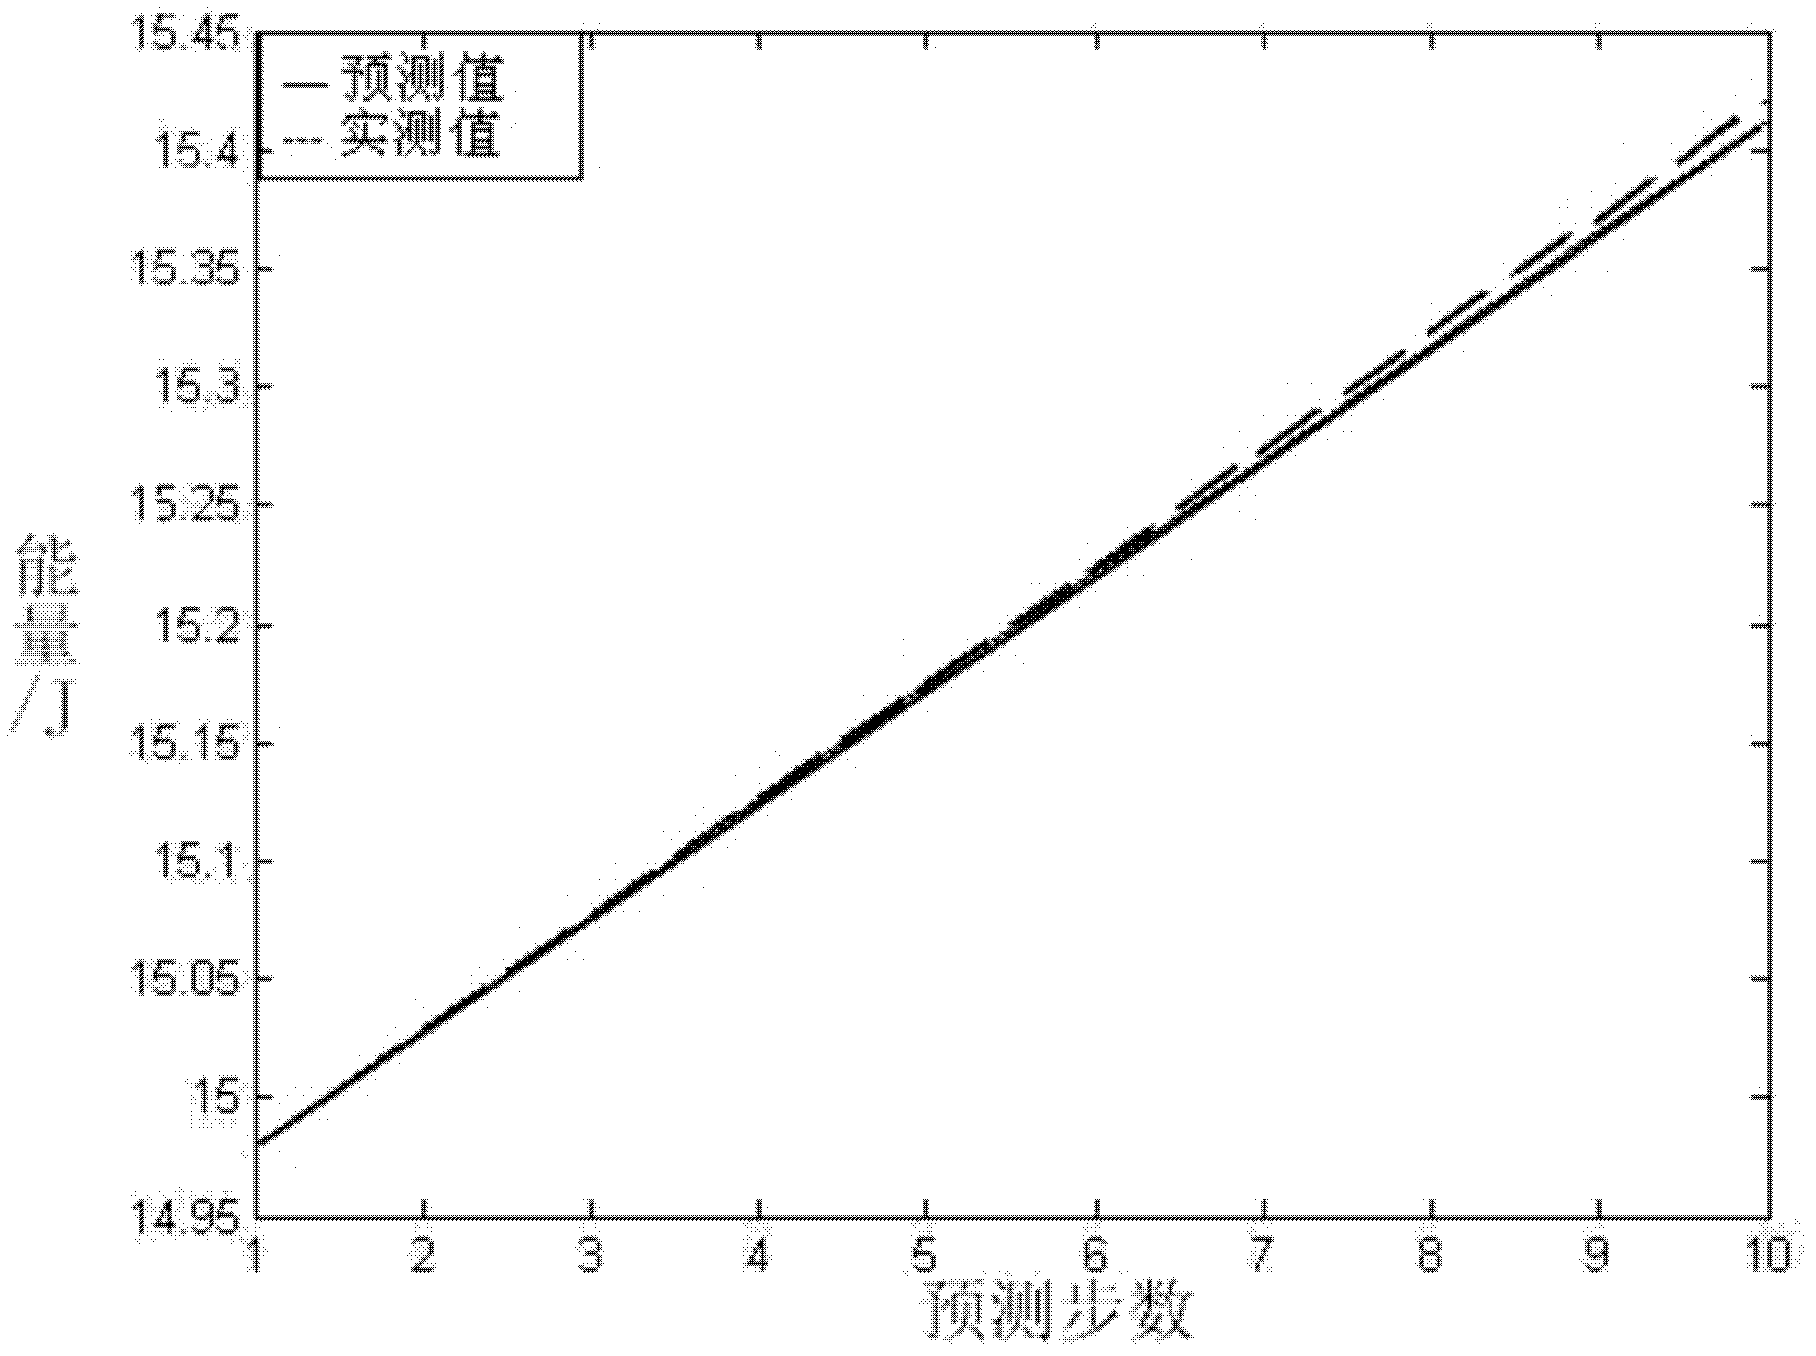 Analog circuit fault prediction method based on ARMA (Autoregressive Moving Average)